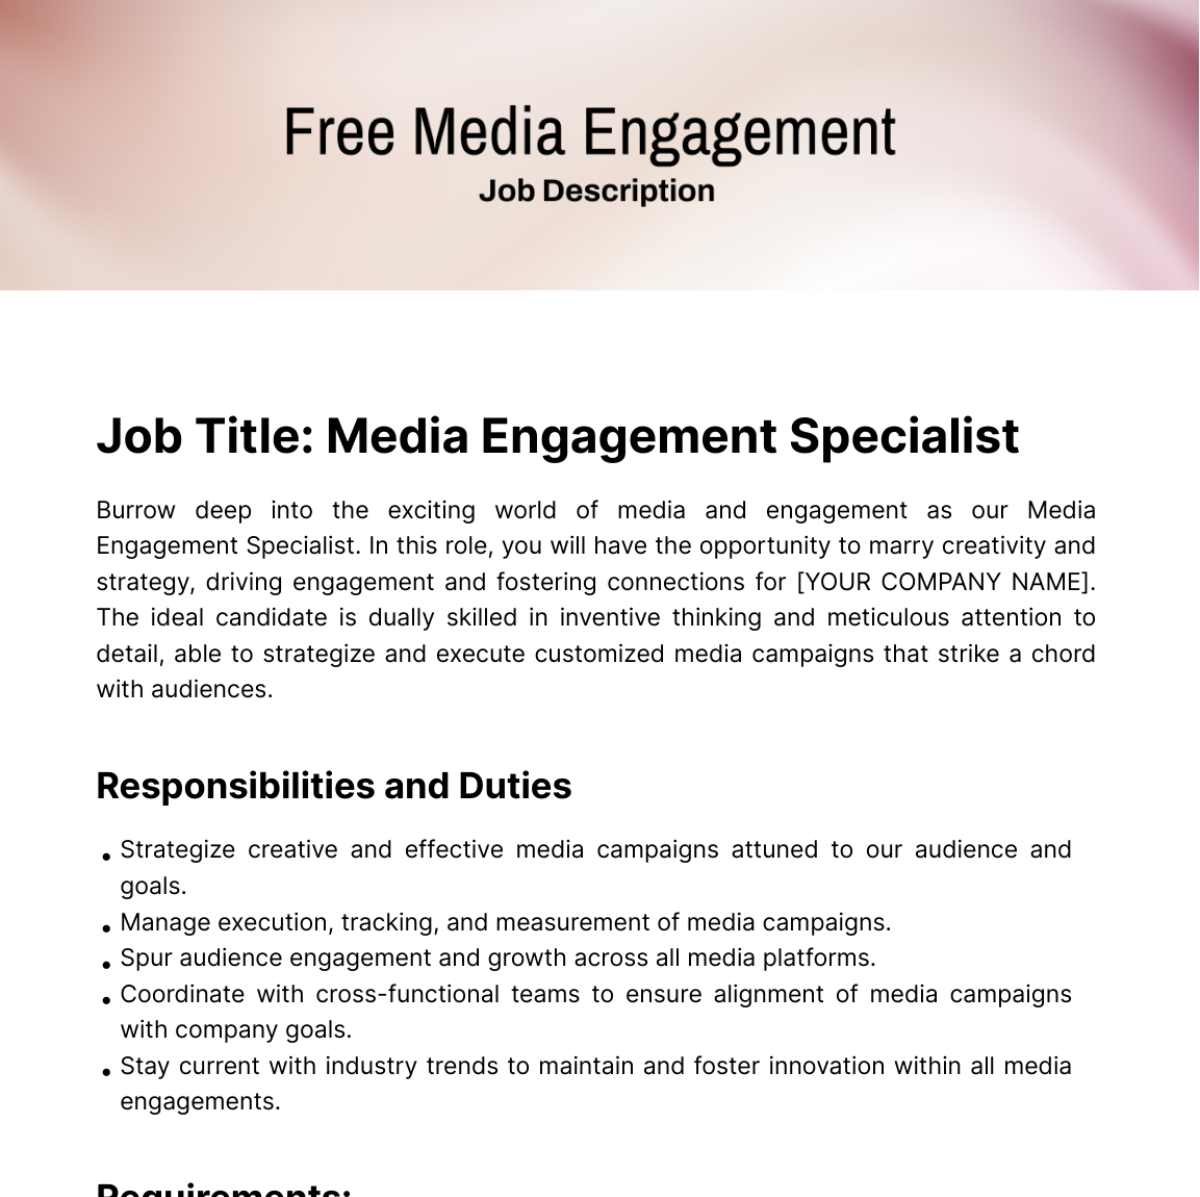 Free Media Engagement Job Description Template